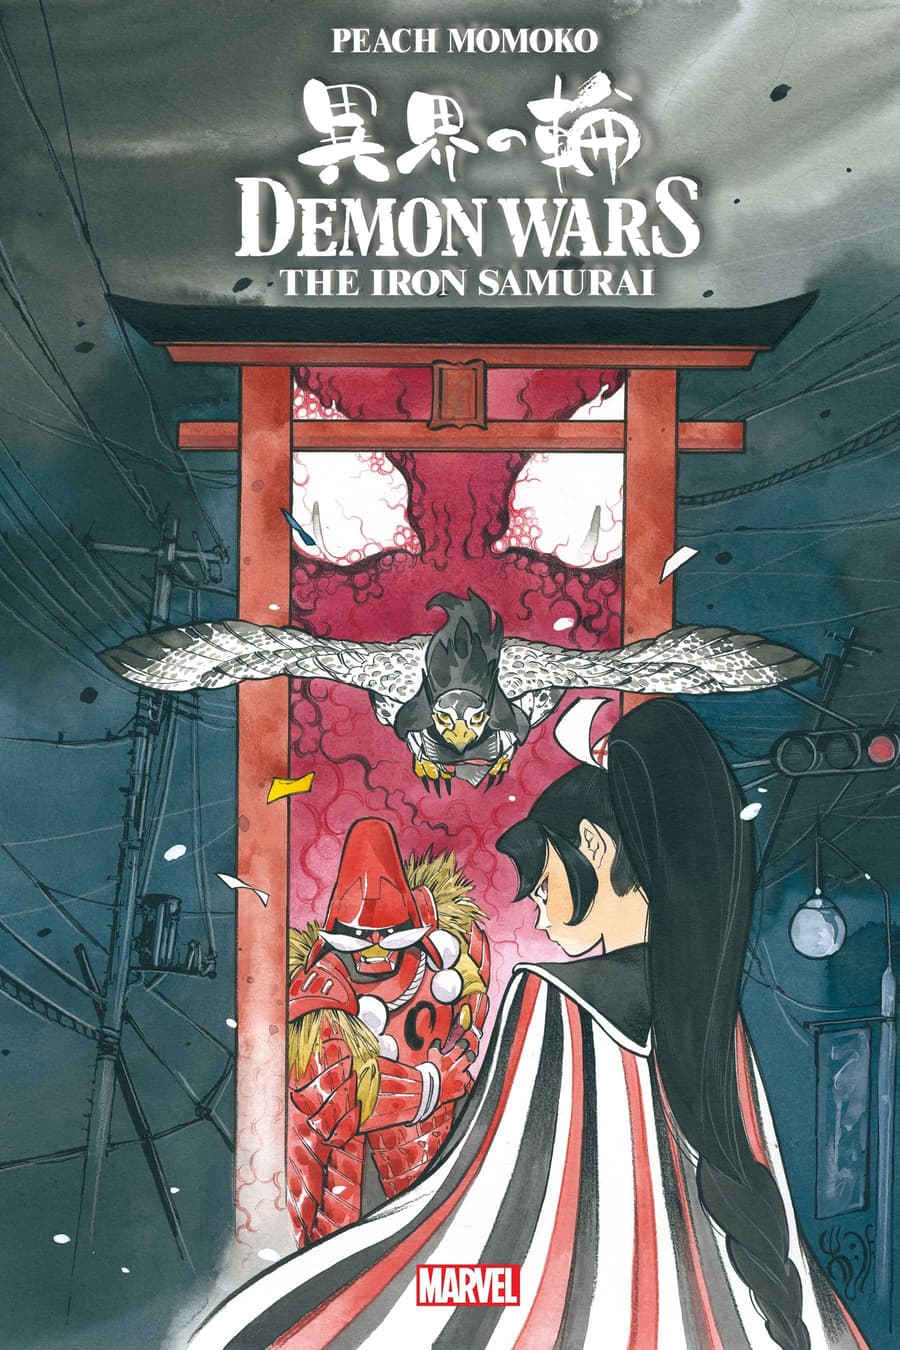 Demon Wars: The Iron Samurai #1 cover by Peach Momoko